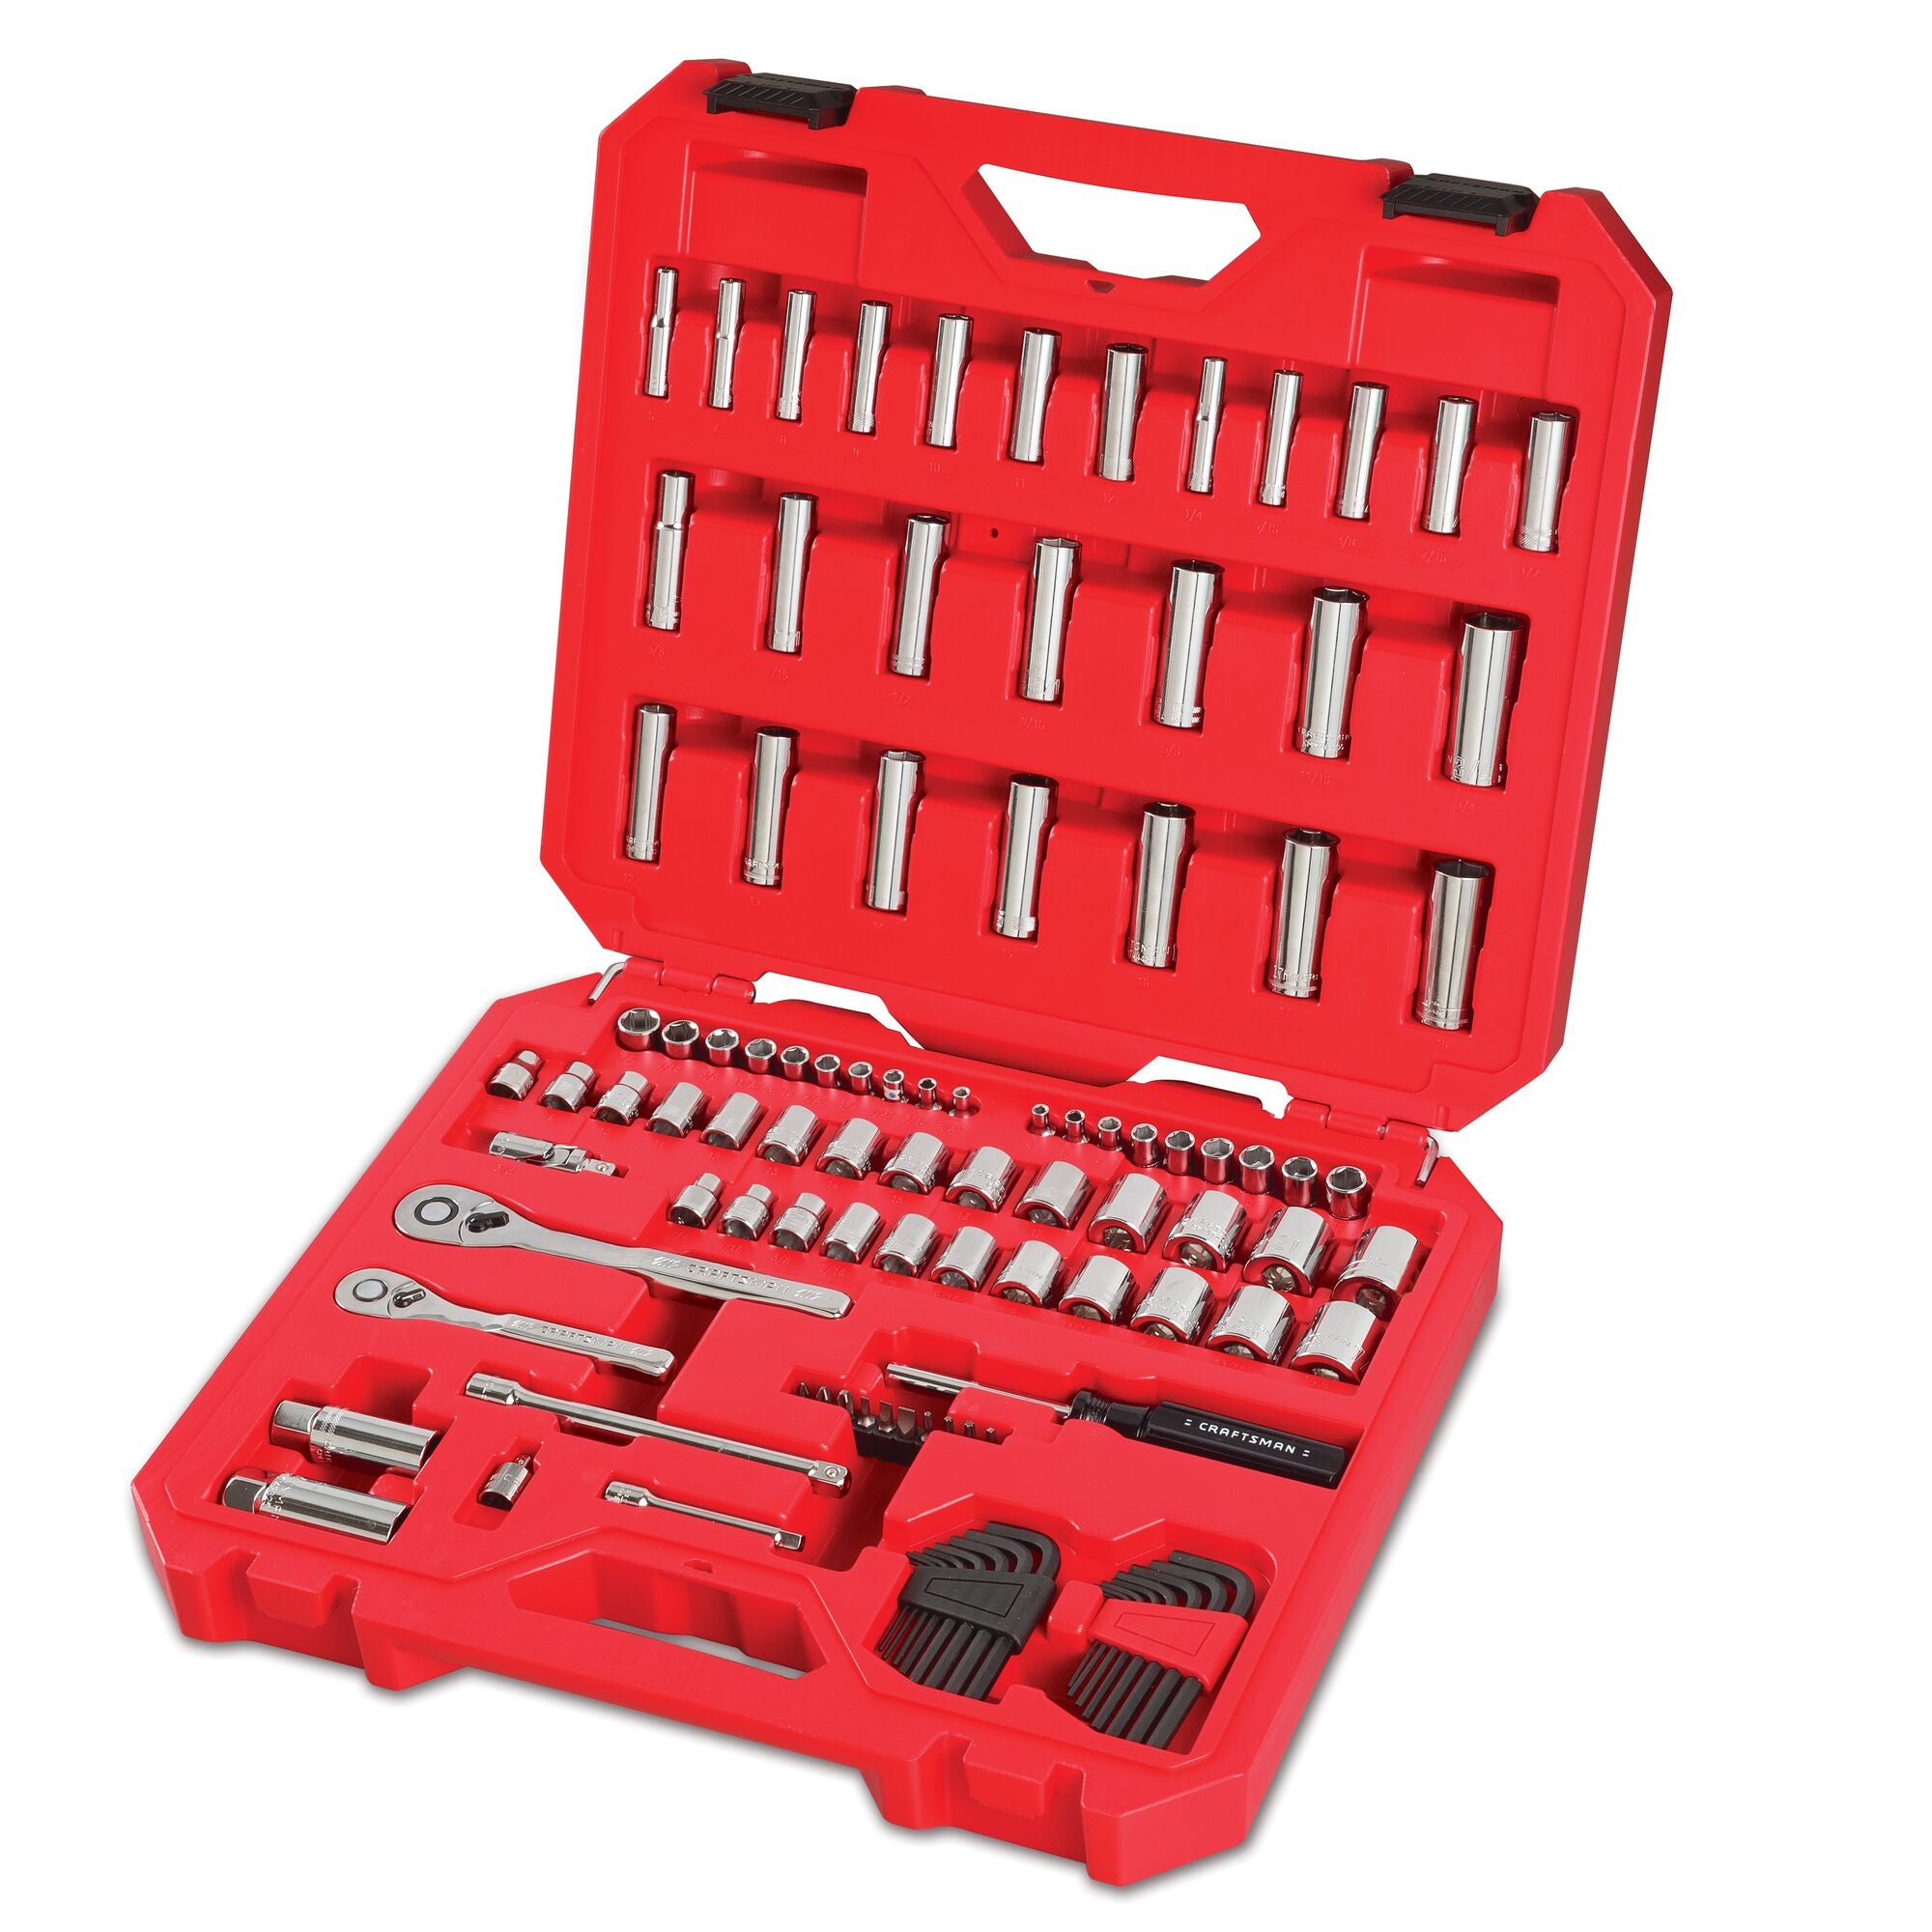 Basics Mechanic's Tool Socket Set con estuche, 123 piezas